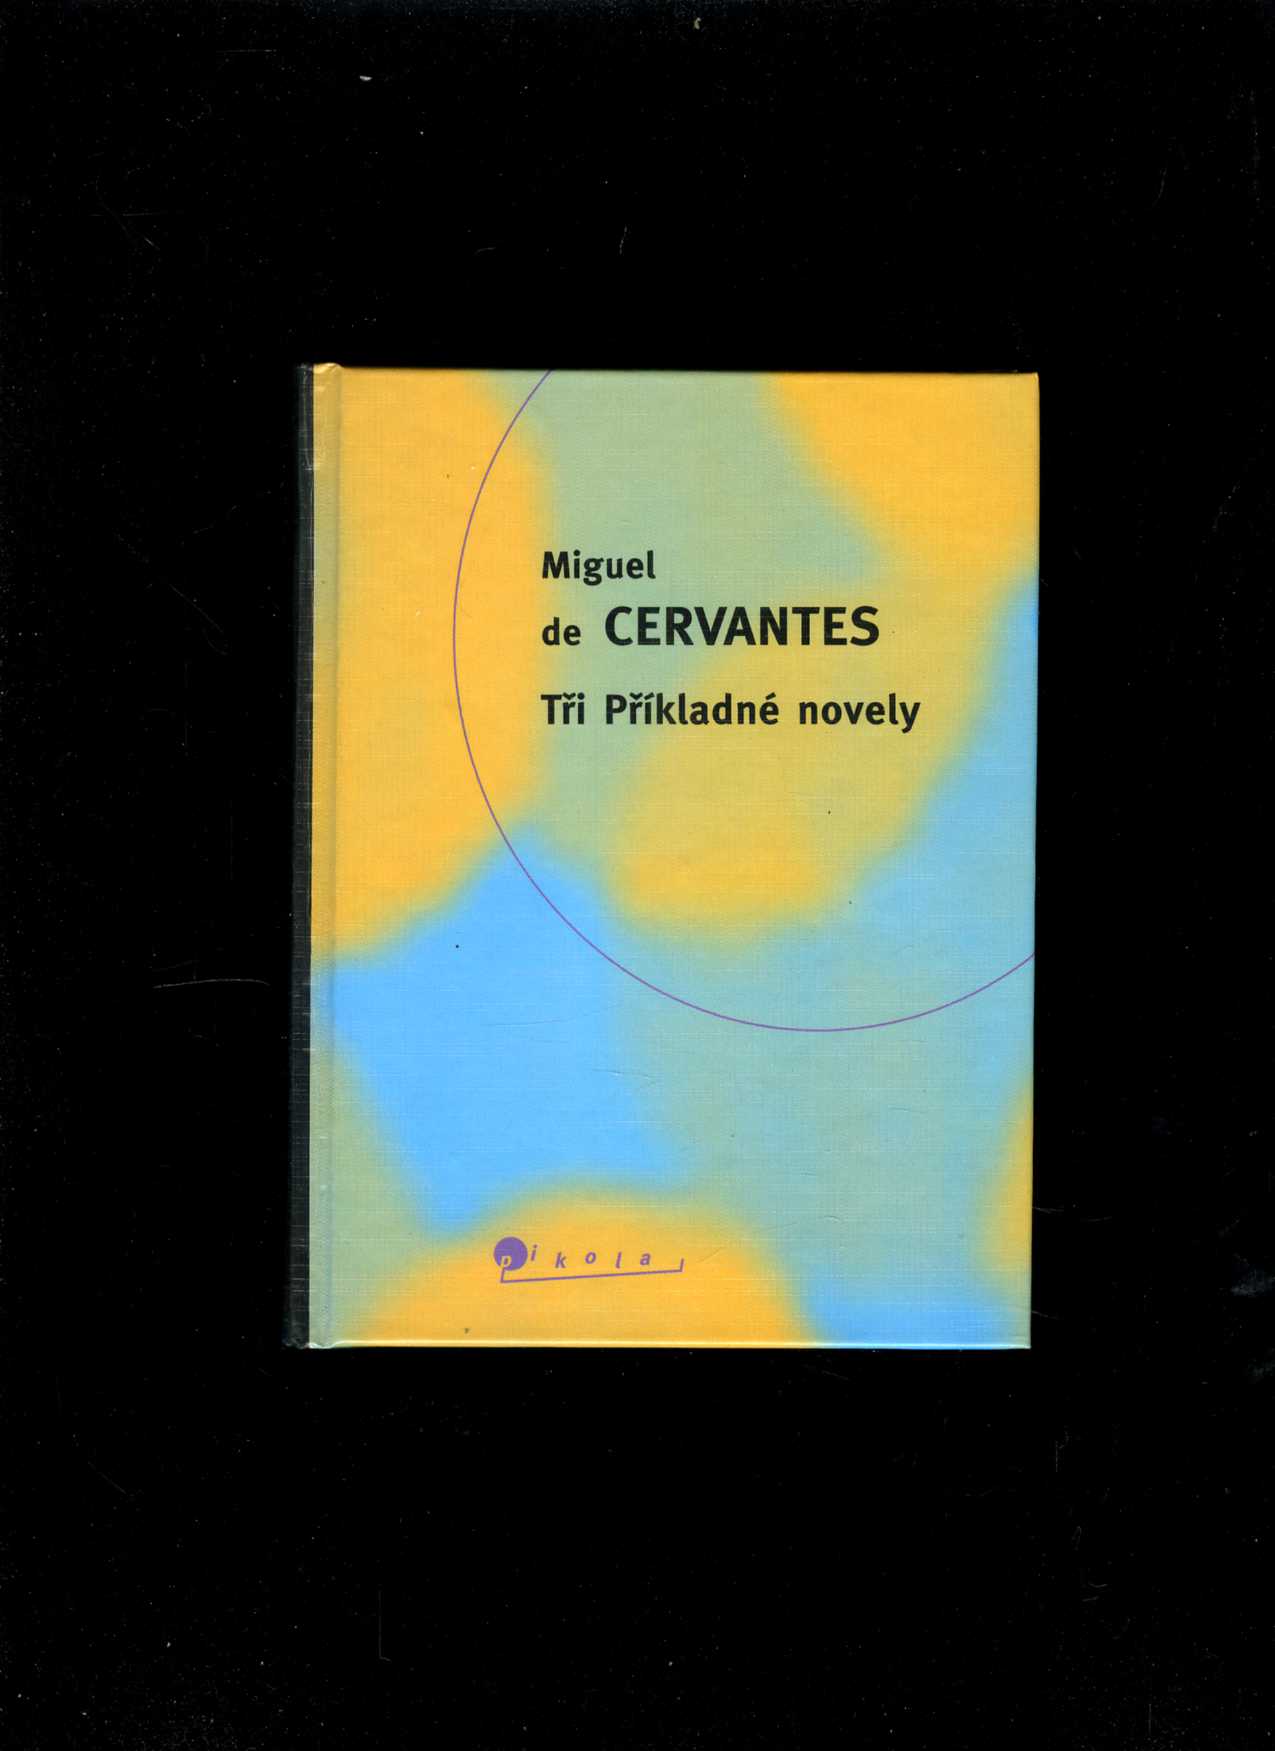 Tři Příkladné novely (Miguel de Cervantes y Saavedra)